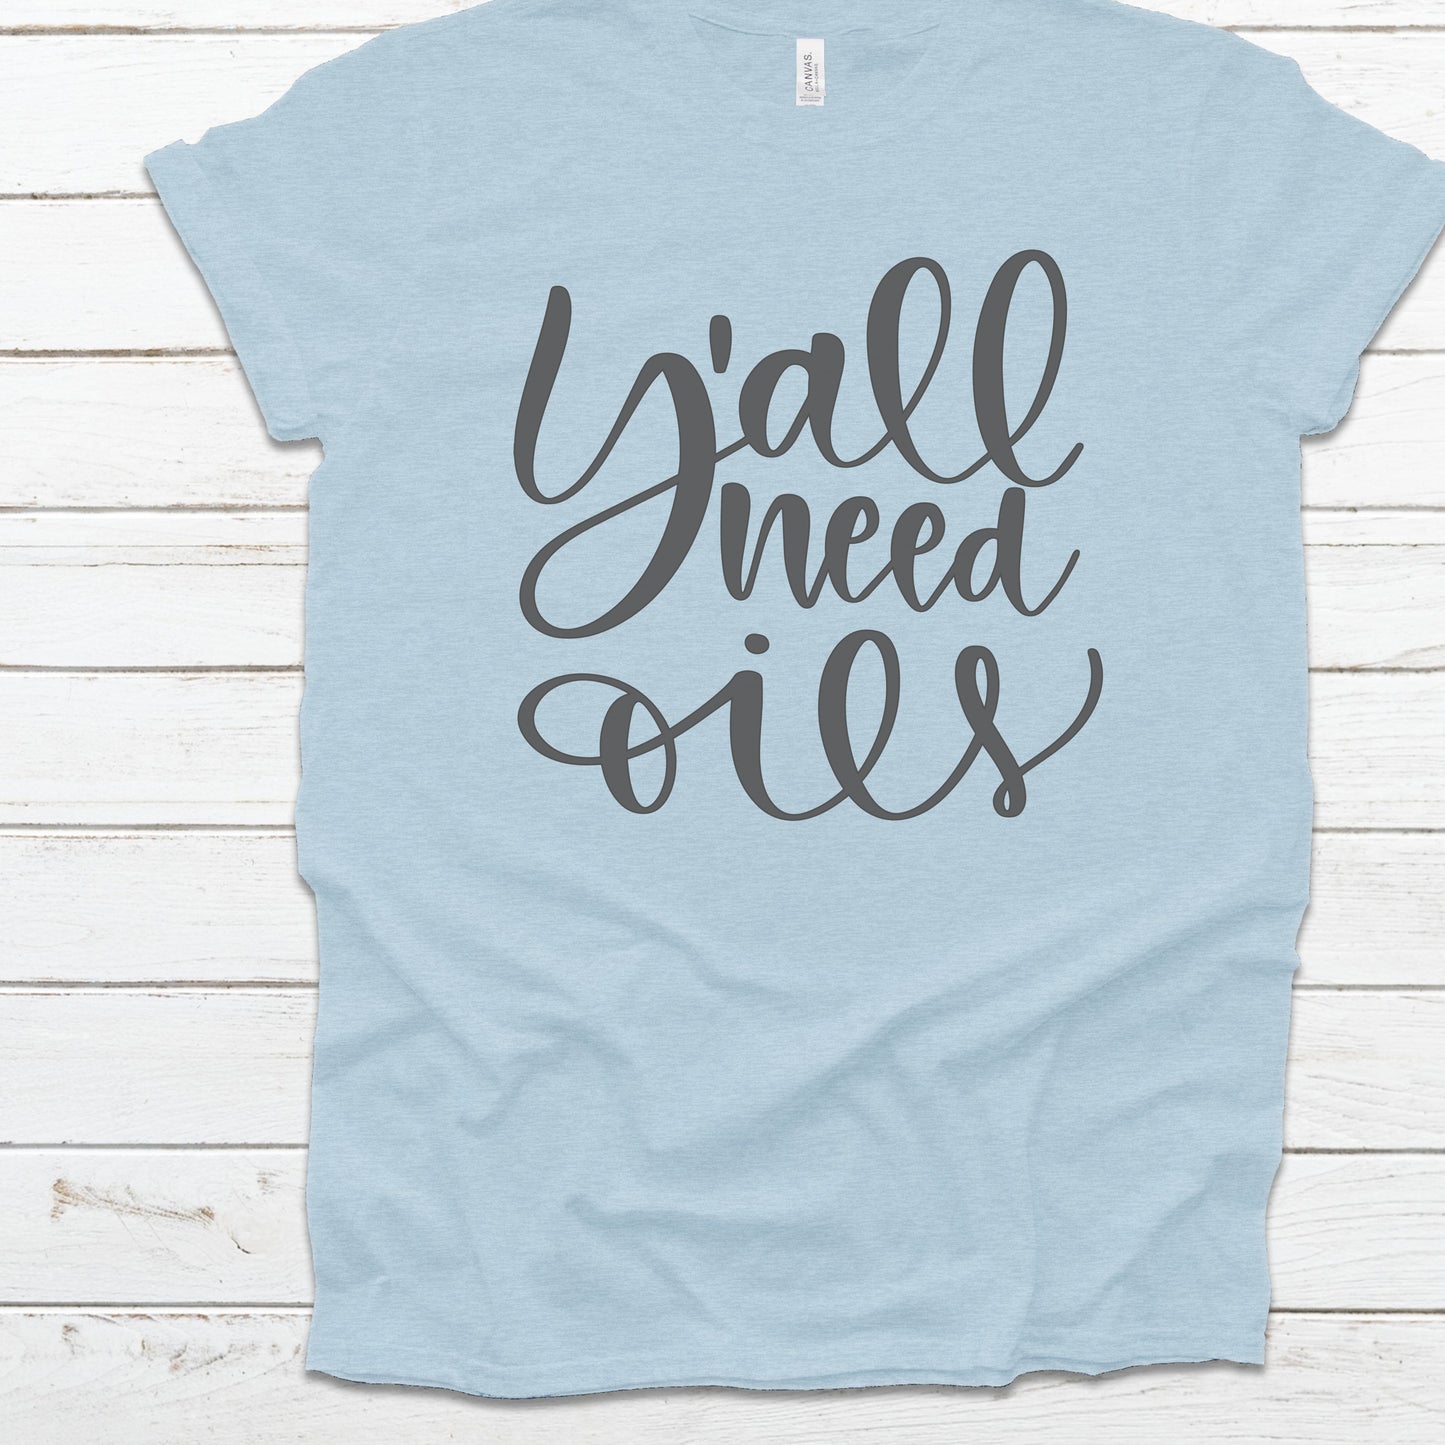 Fantastic, custom "Y'all need oils" T-shirt